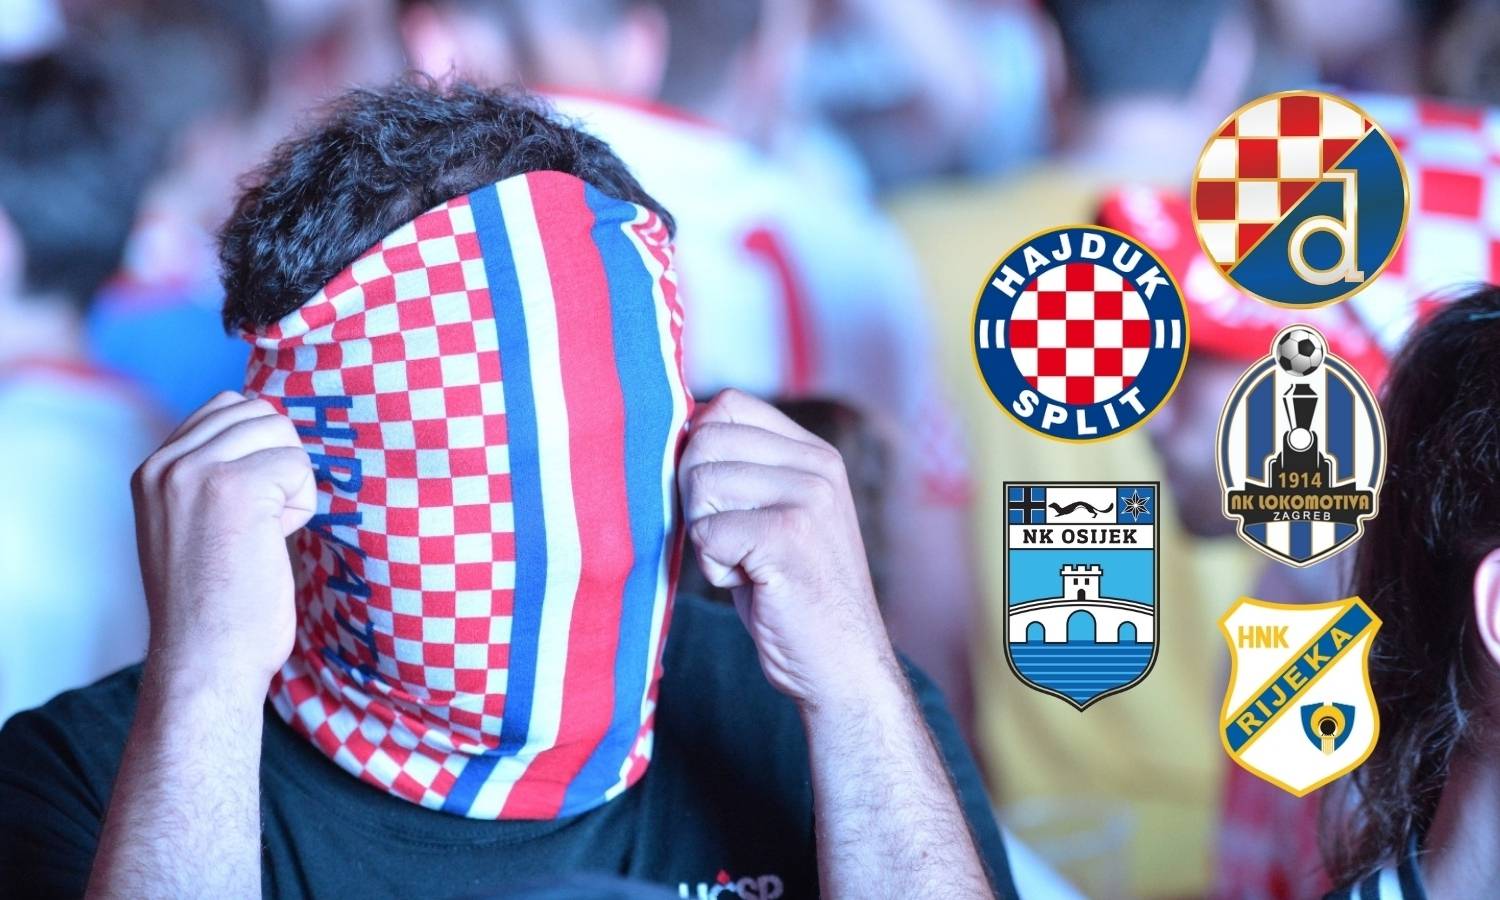 Ajme debakla: Hrvatska skupila manje bodova od Gibraltara, Farskih Otoka, Kosova i Malte!?